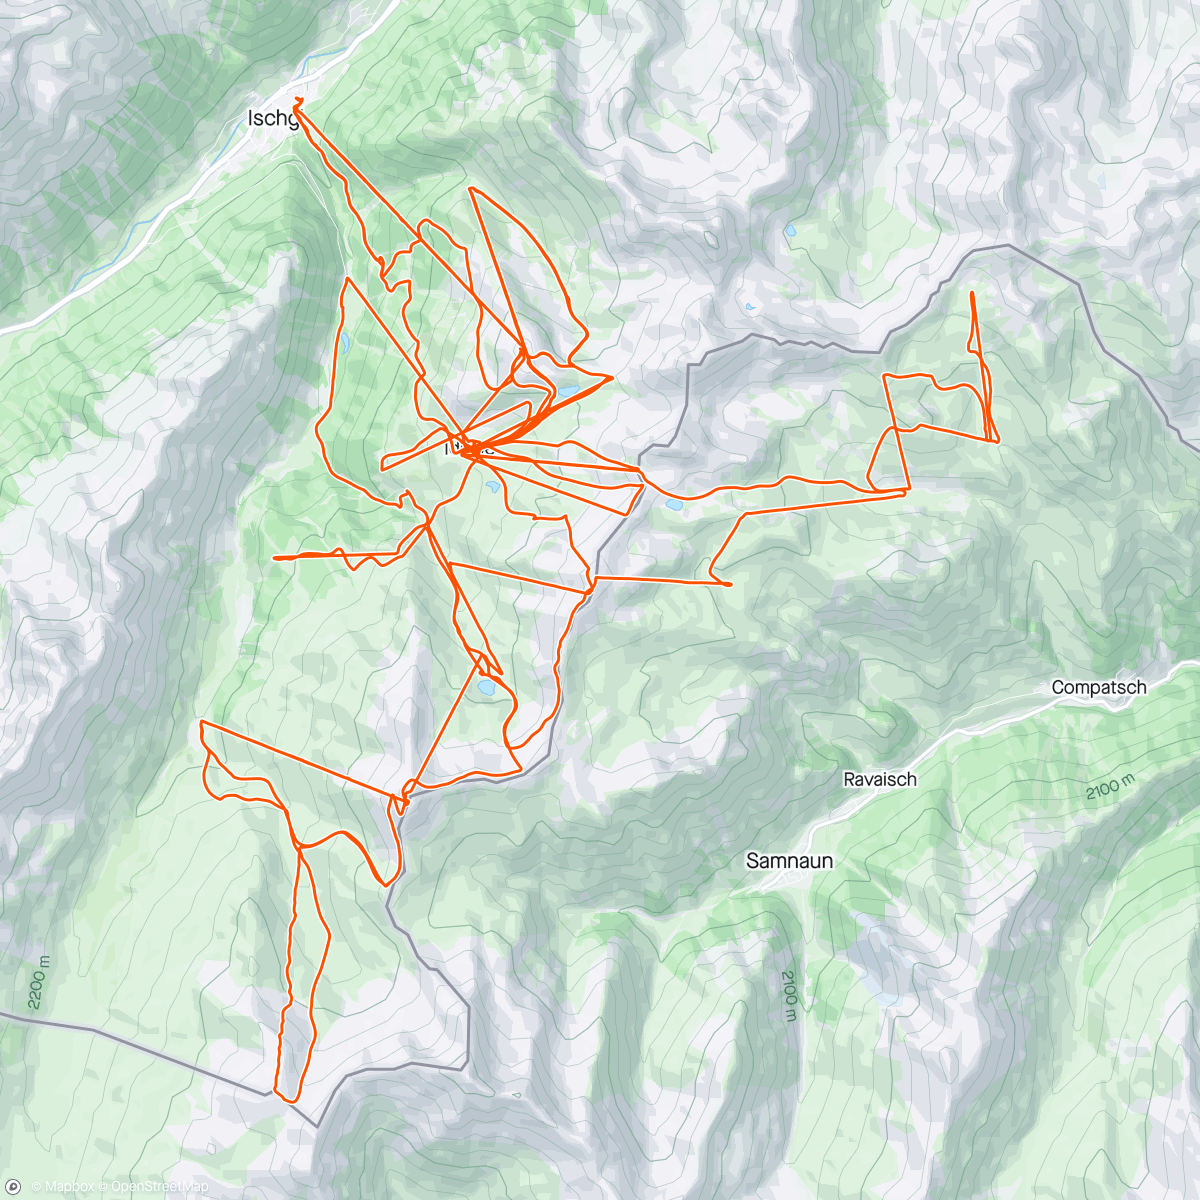 Map of the activity, Ochtendsessie alpineskiën